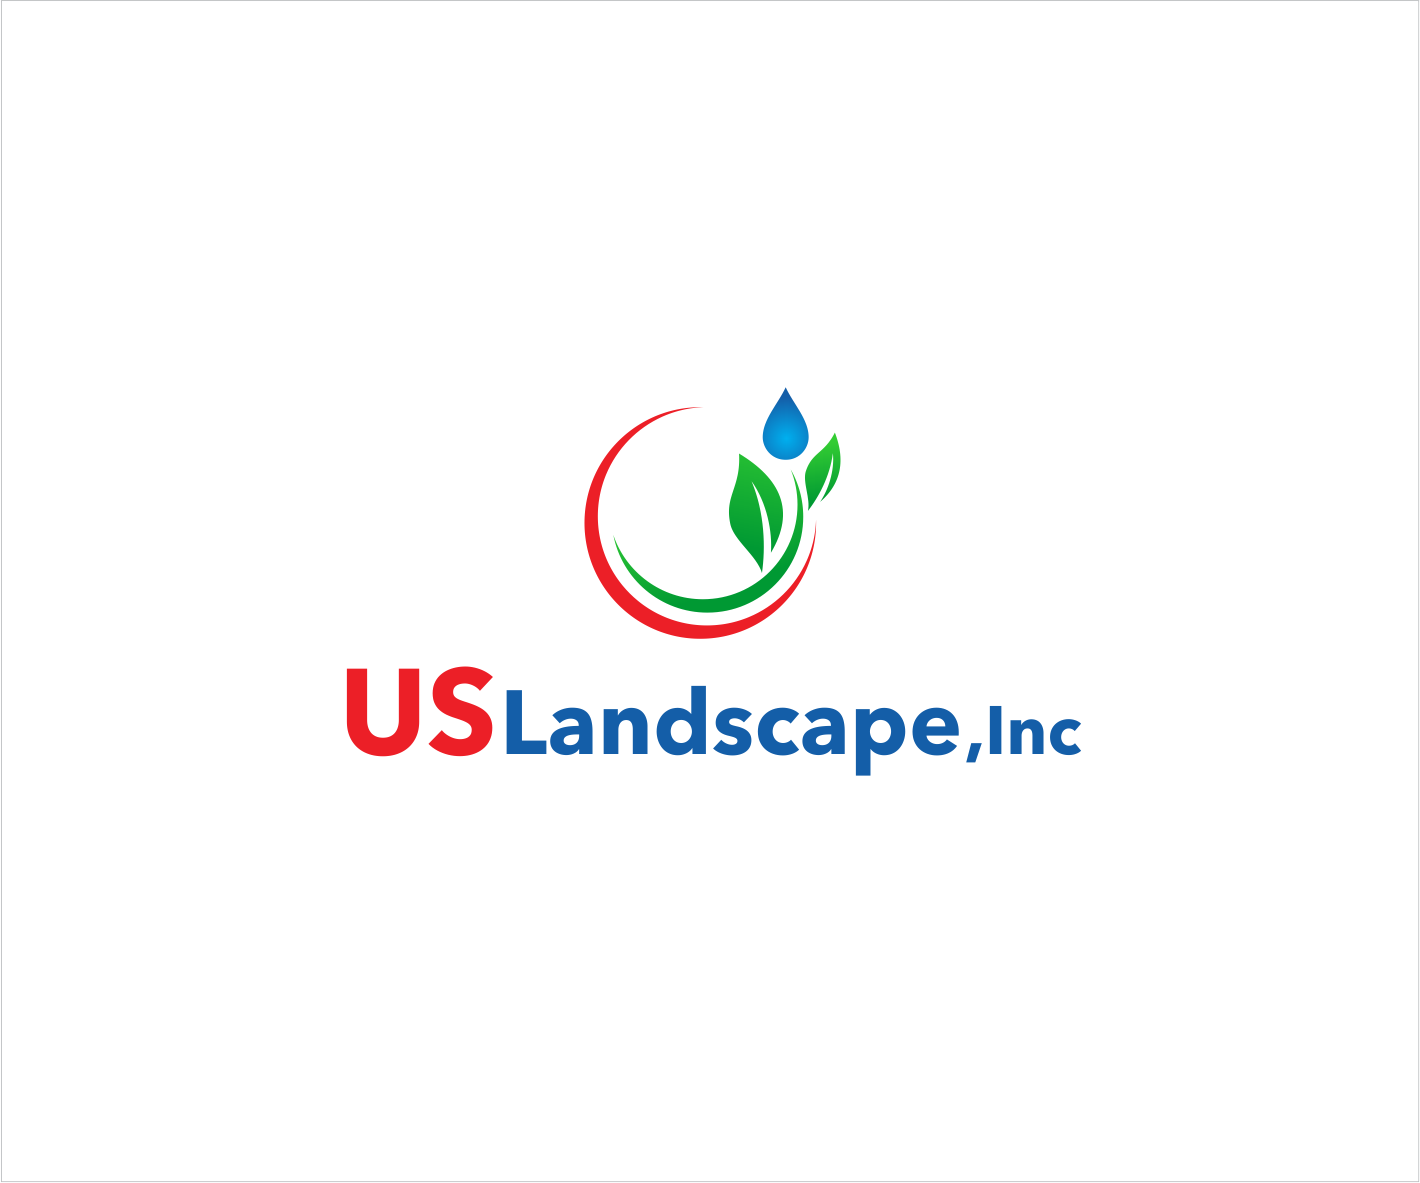 U.S. Landscape, Inc. Logo